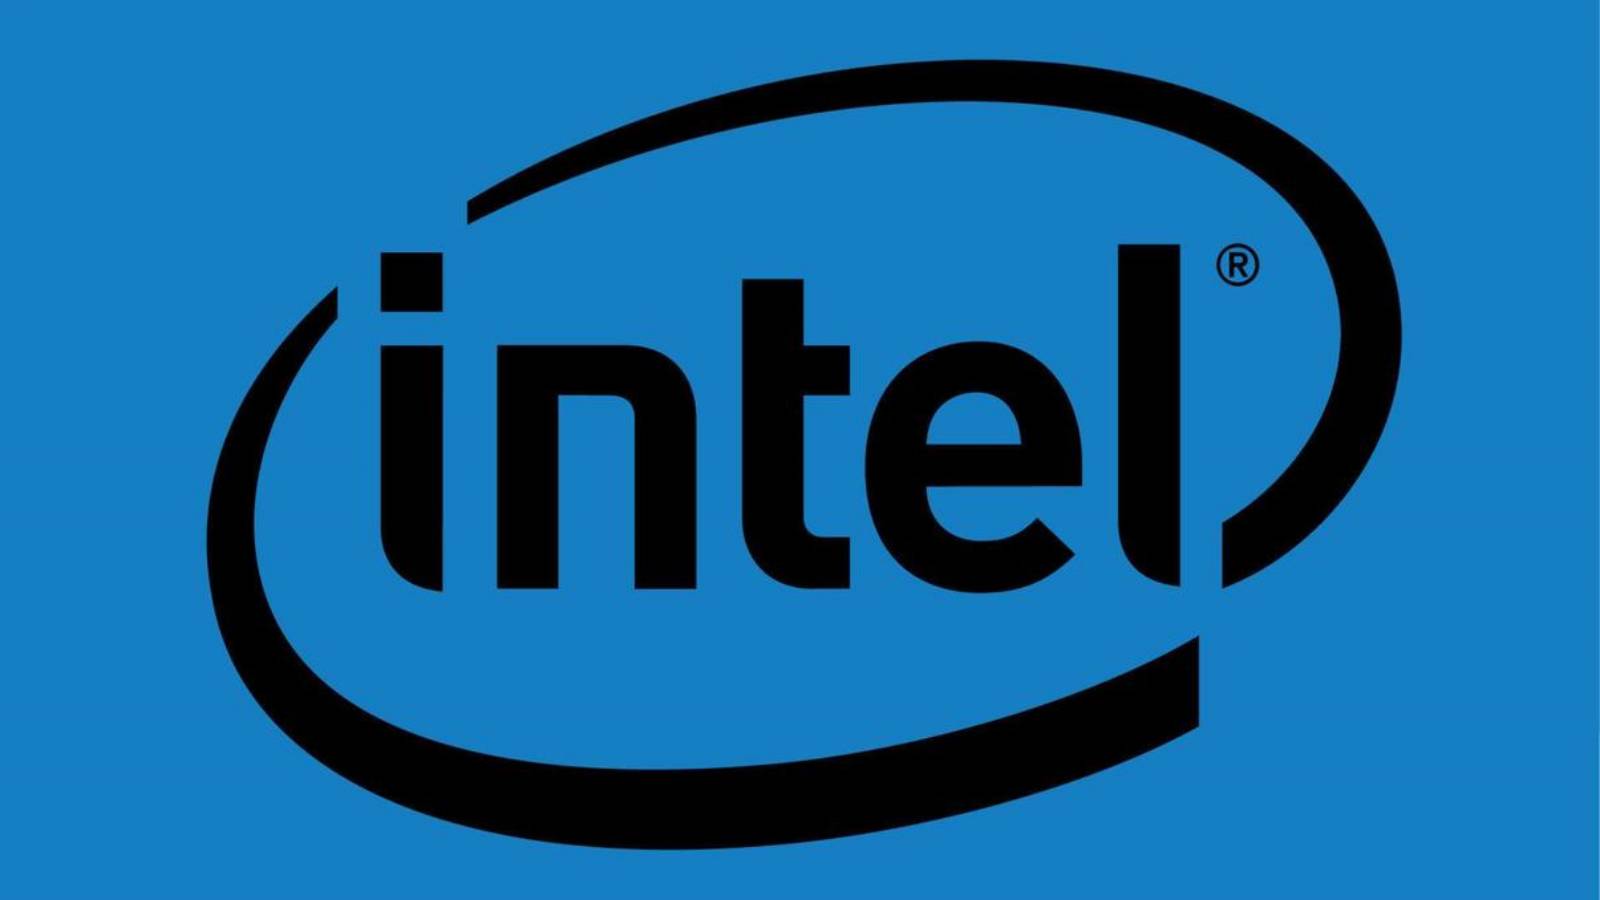 Huawei Intel SLÅR AMD Tack vare Joe Biden Administration